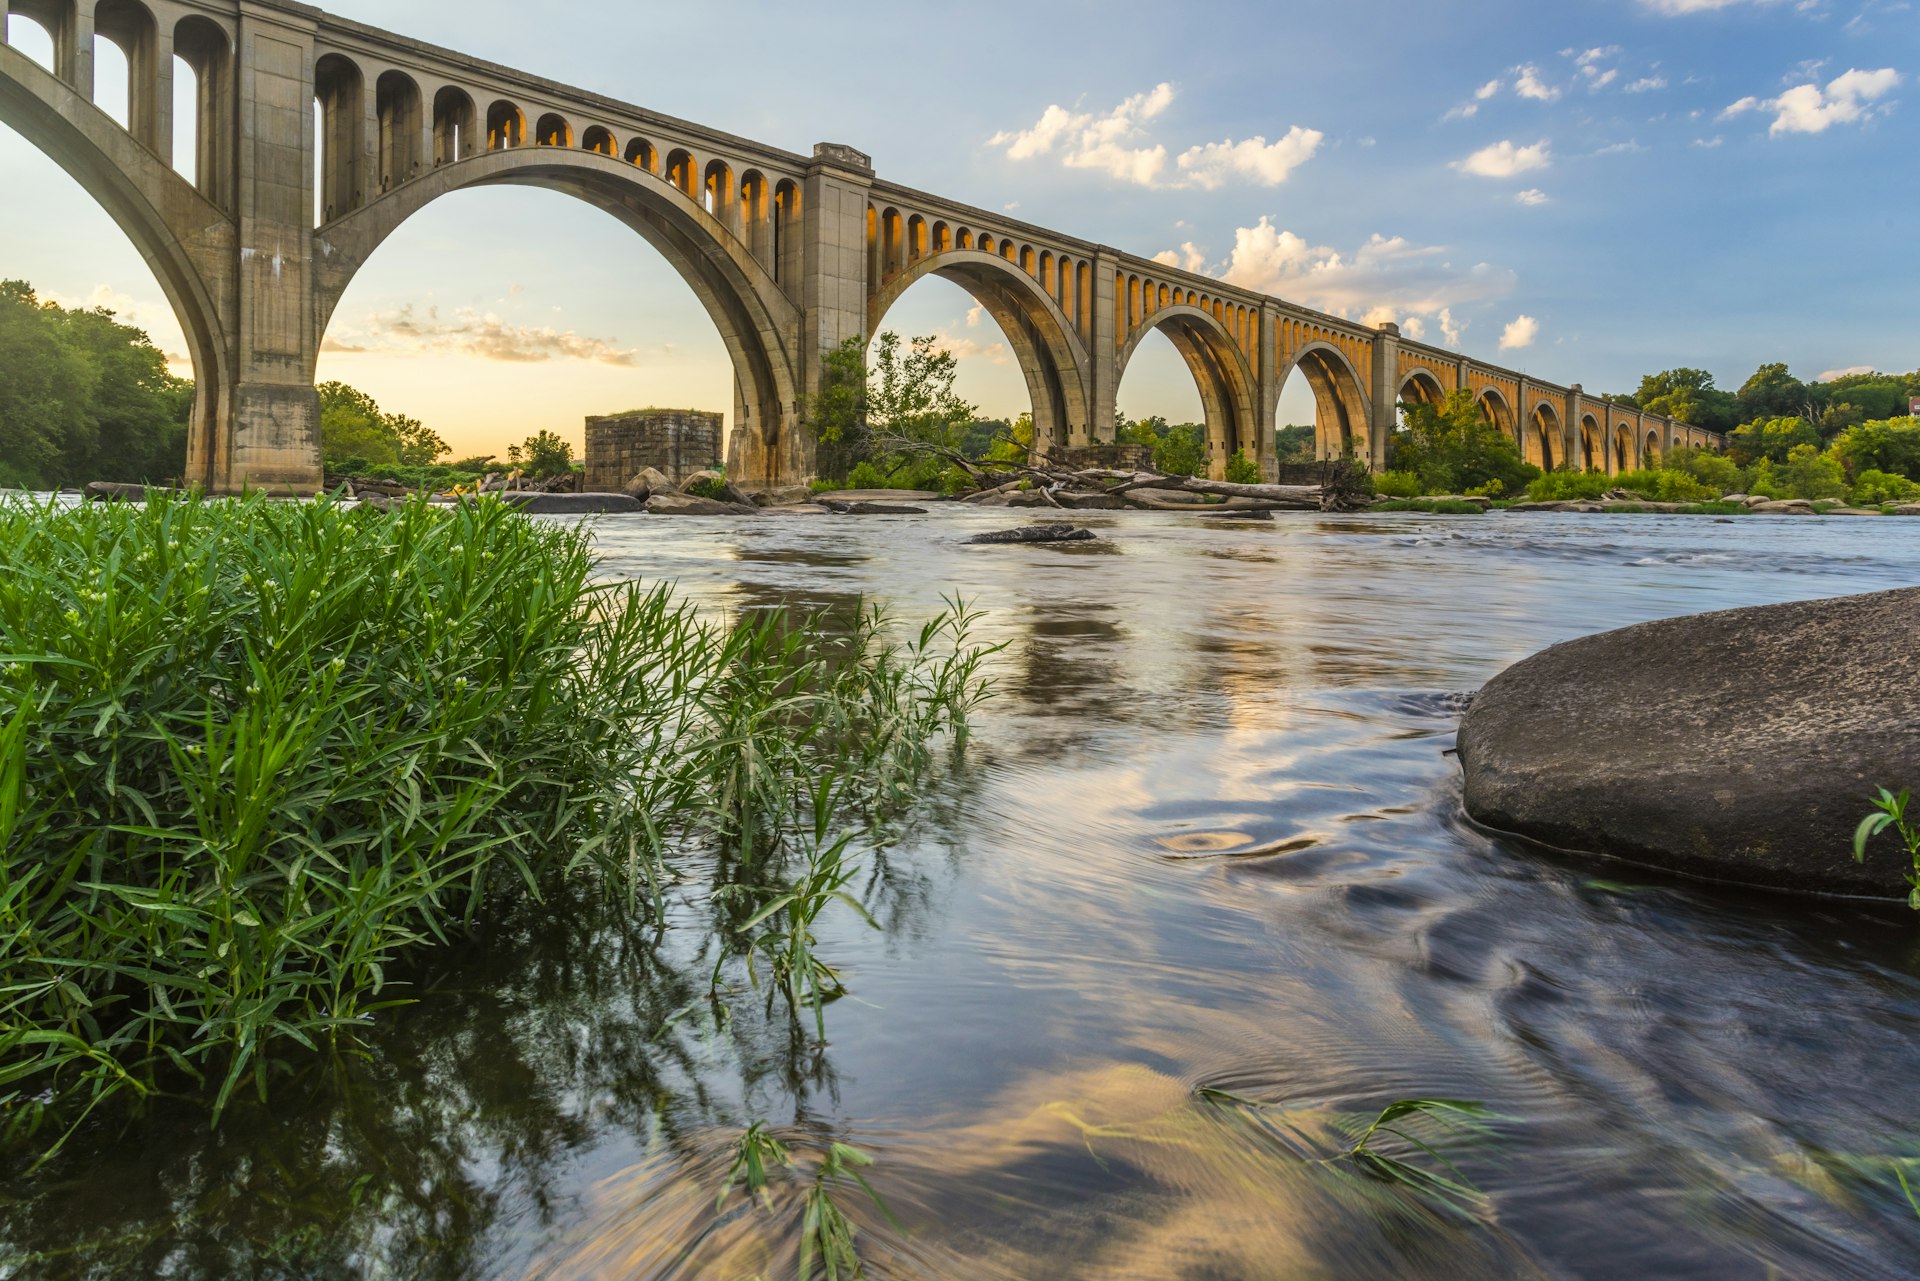 Concrete arch railroad bridge spanning the James River in Richmond, Virginia